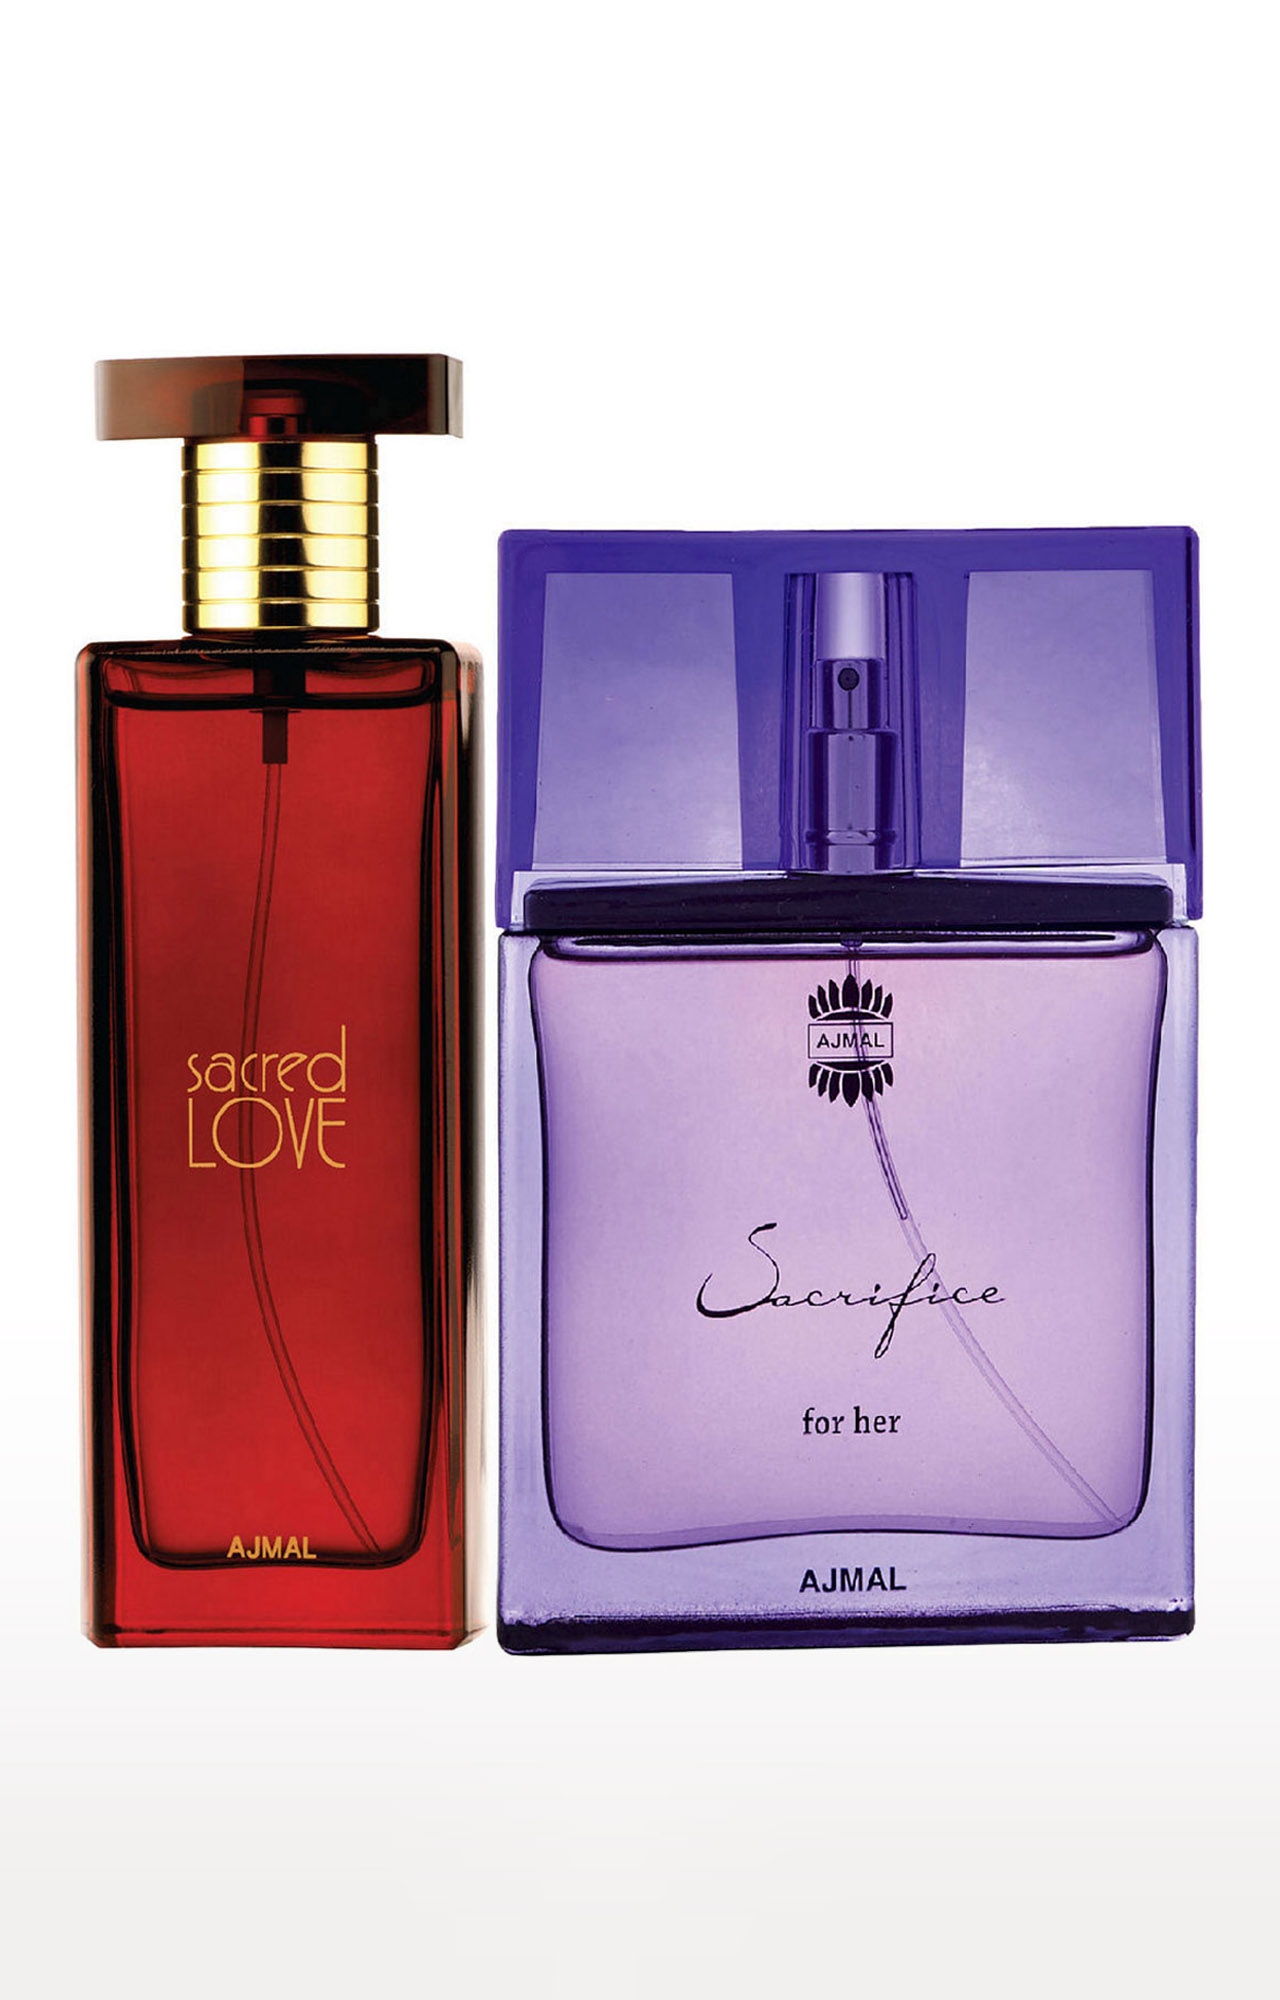 Ajmal Sacred Love EDP Musky Perfume 50ml for Women and Sacrifice for HER EDP Musky Perfume 50ml for Women